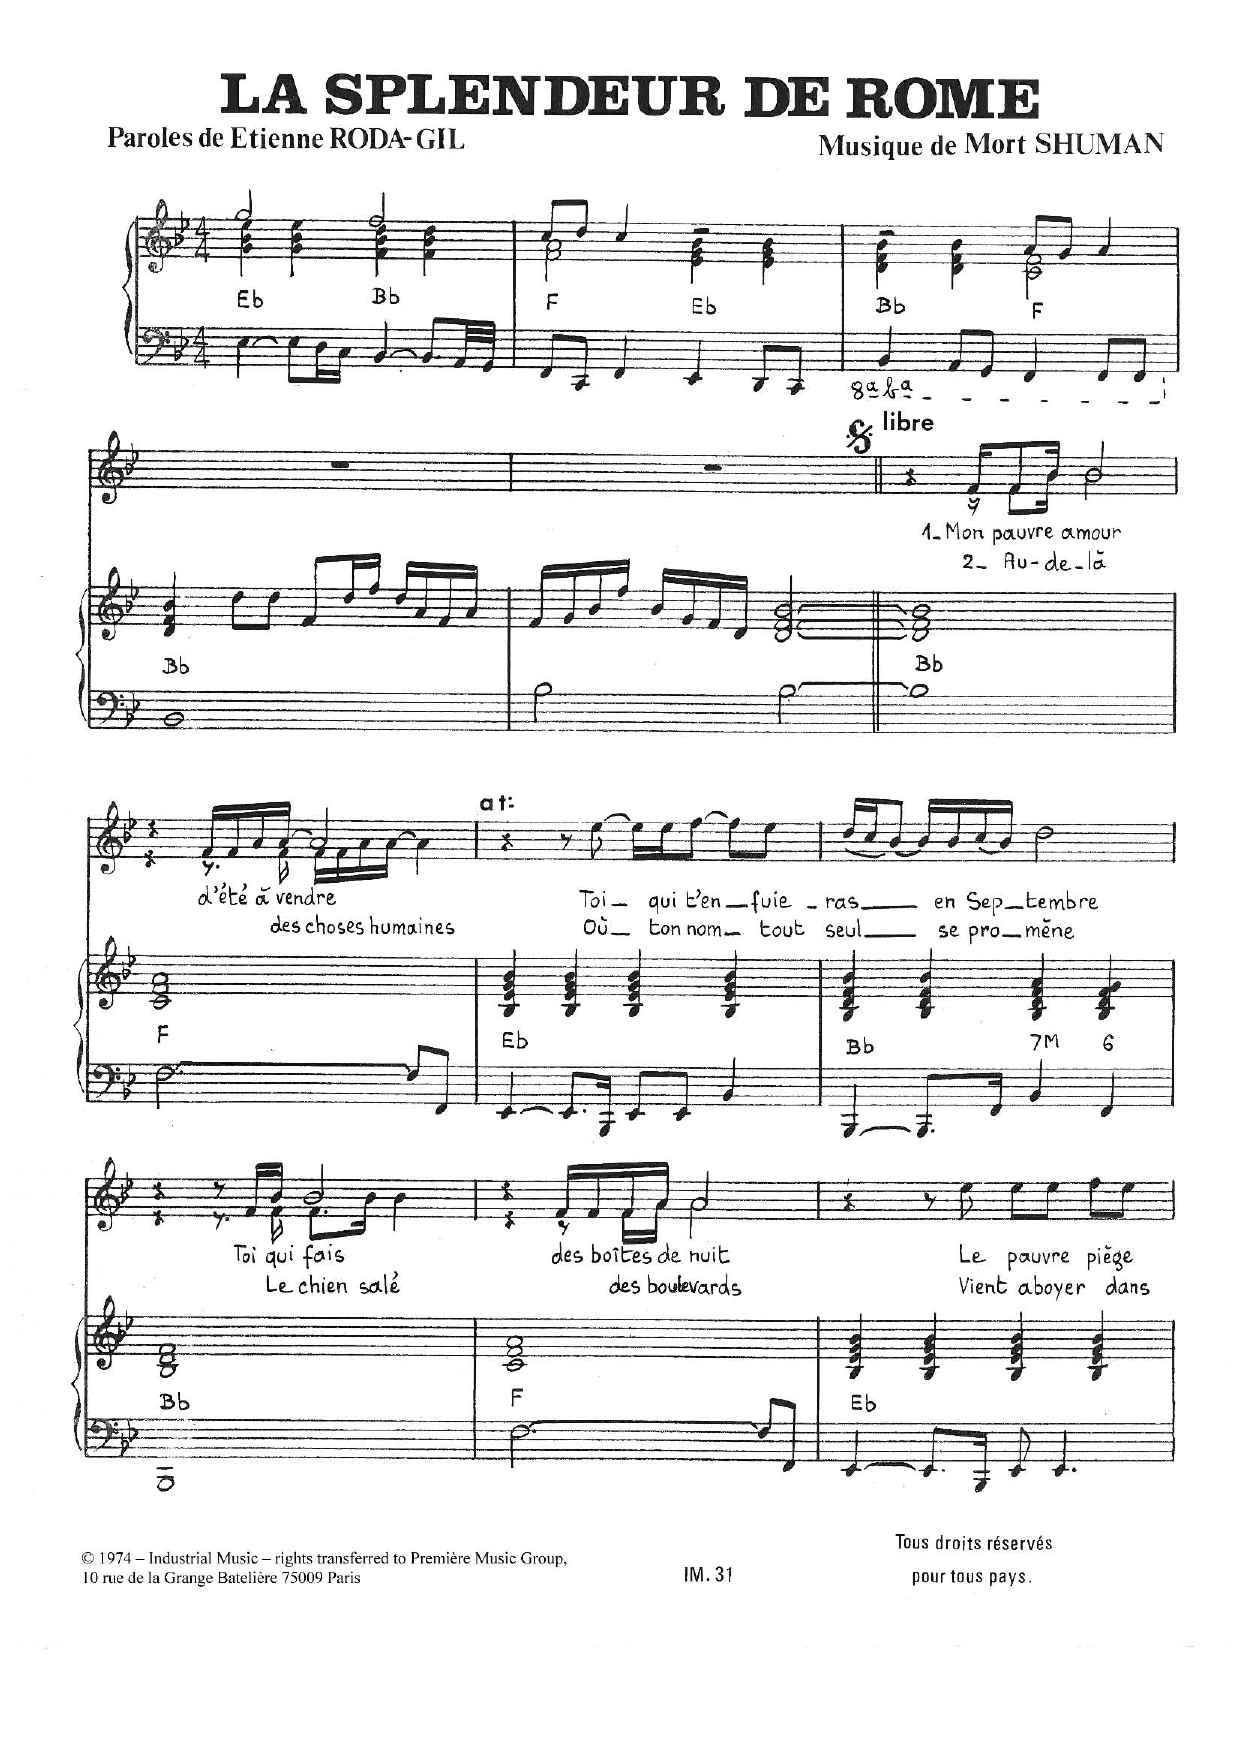 Mort Shuman La Splendeur De Rome Sheet Music Notes & Chords for Piano & Vocal - Download or Print PDF